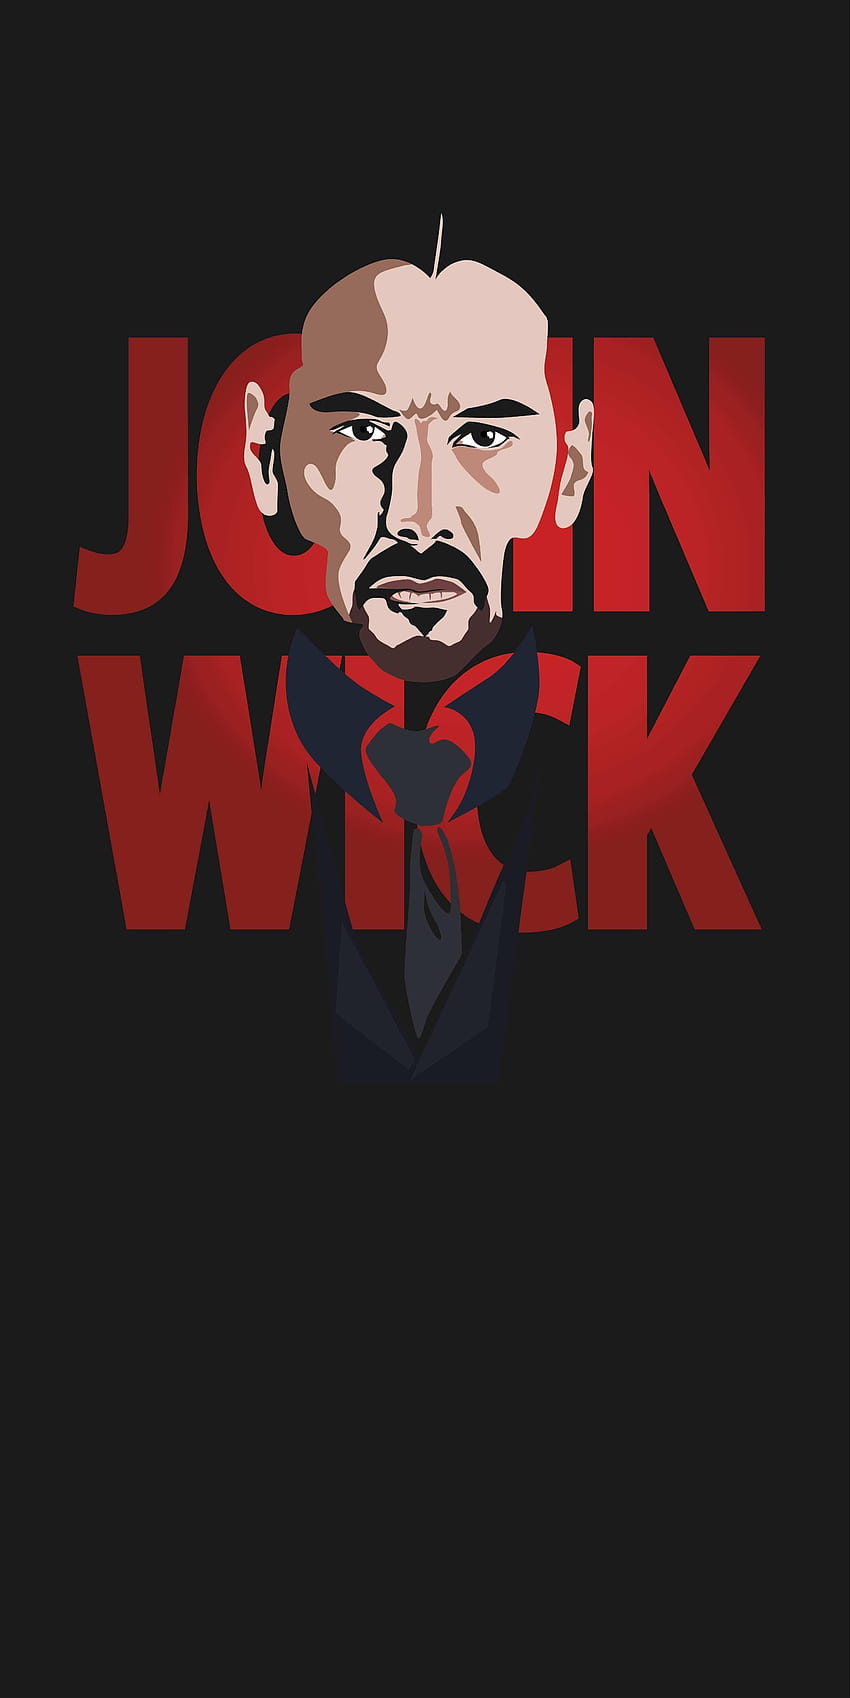 John Wick 2 wallpaper • Zedge  Keanu reeves, Keanu reeves john wick, John  wick movie